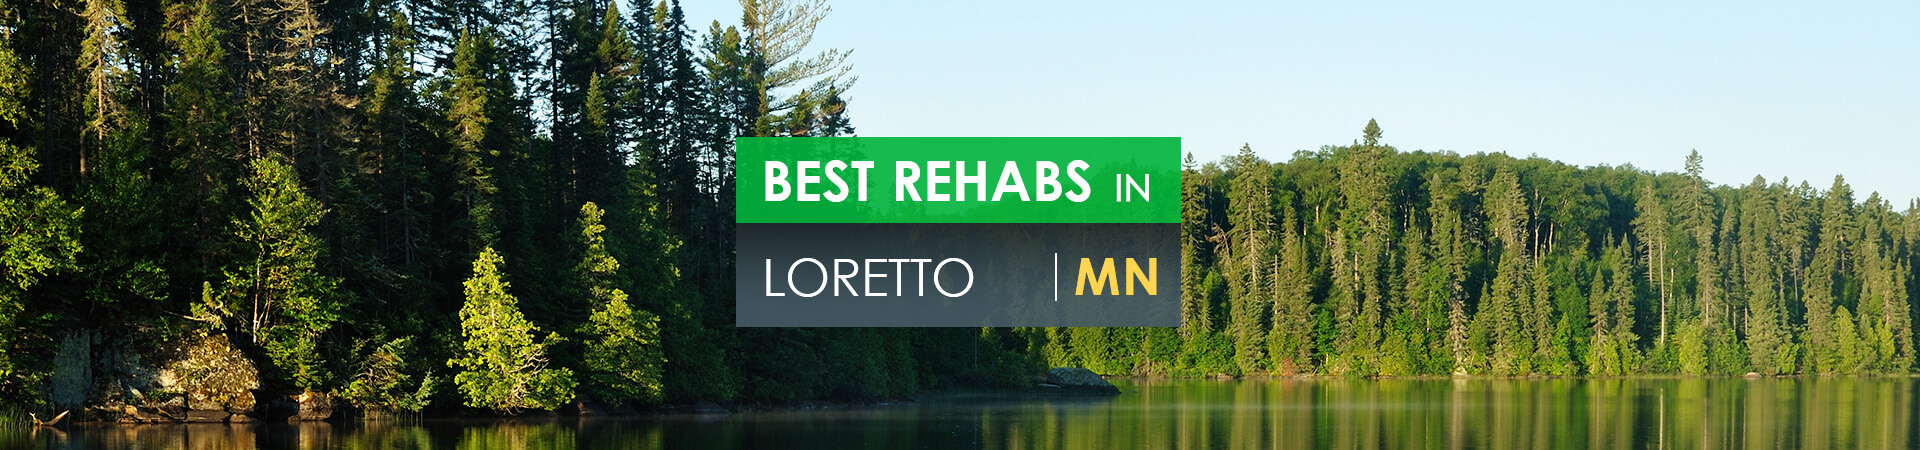 Best rehabs in Loretto, MN